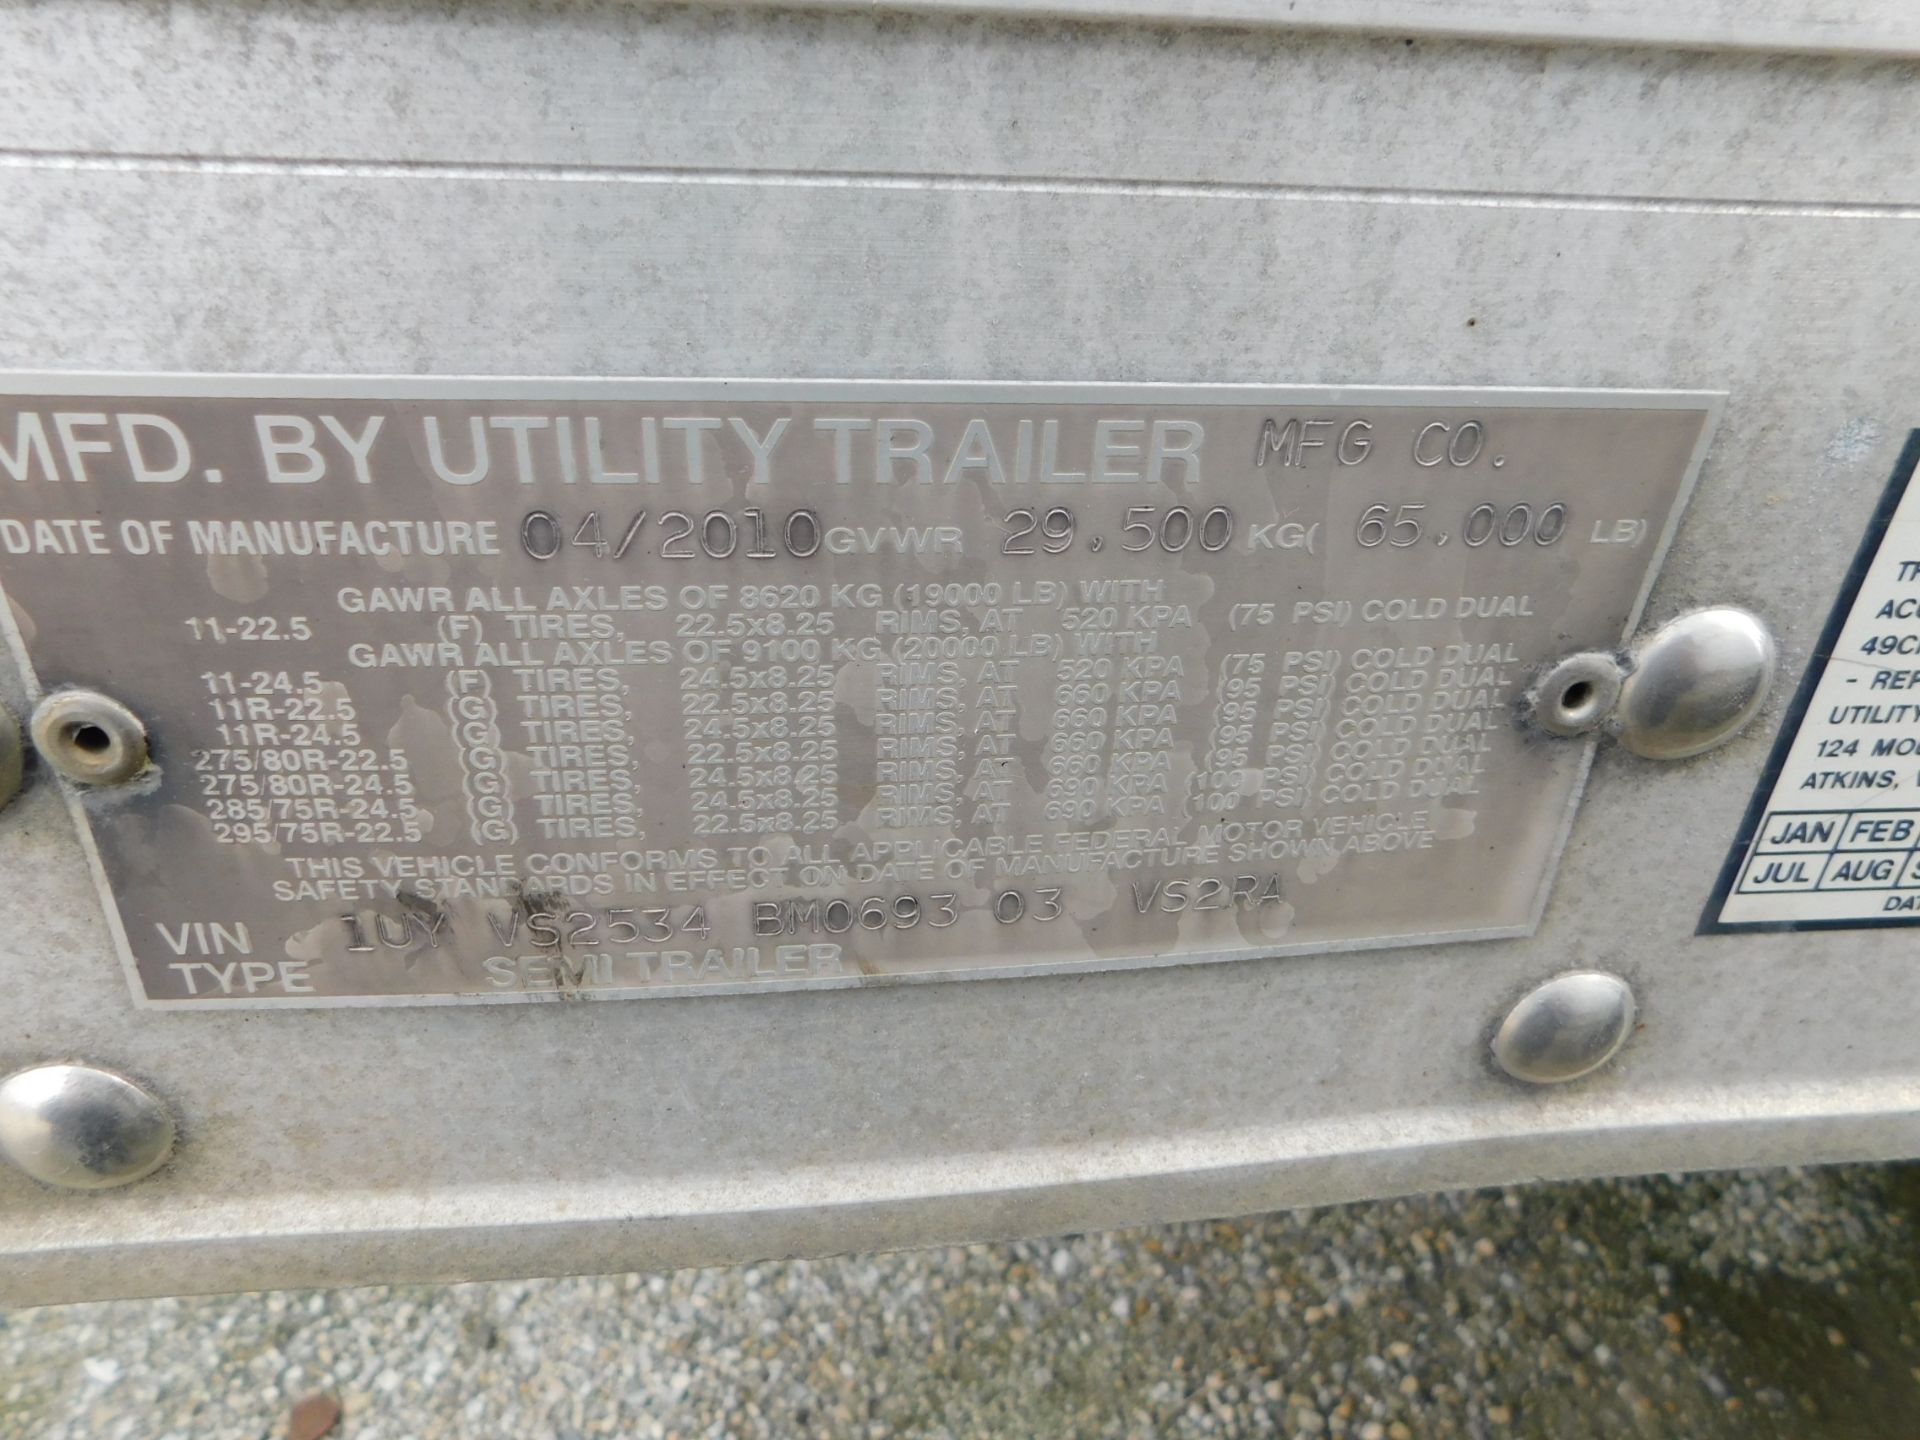 2010 Utility 53' 3000R Reefer Van Trailer, Model VS2RA, Thermo King Model SB-210+, 14,649 Total - Image 2 of 10